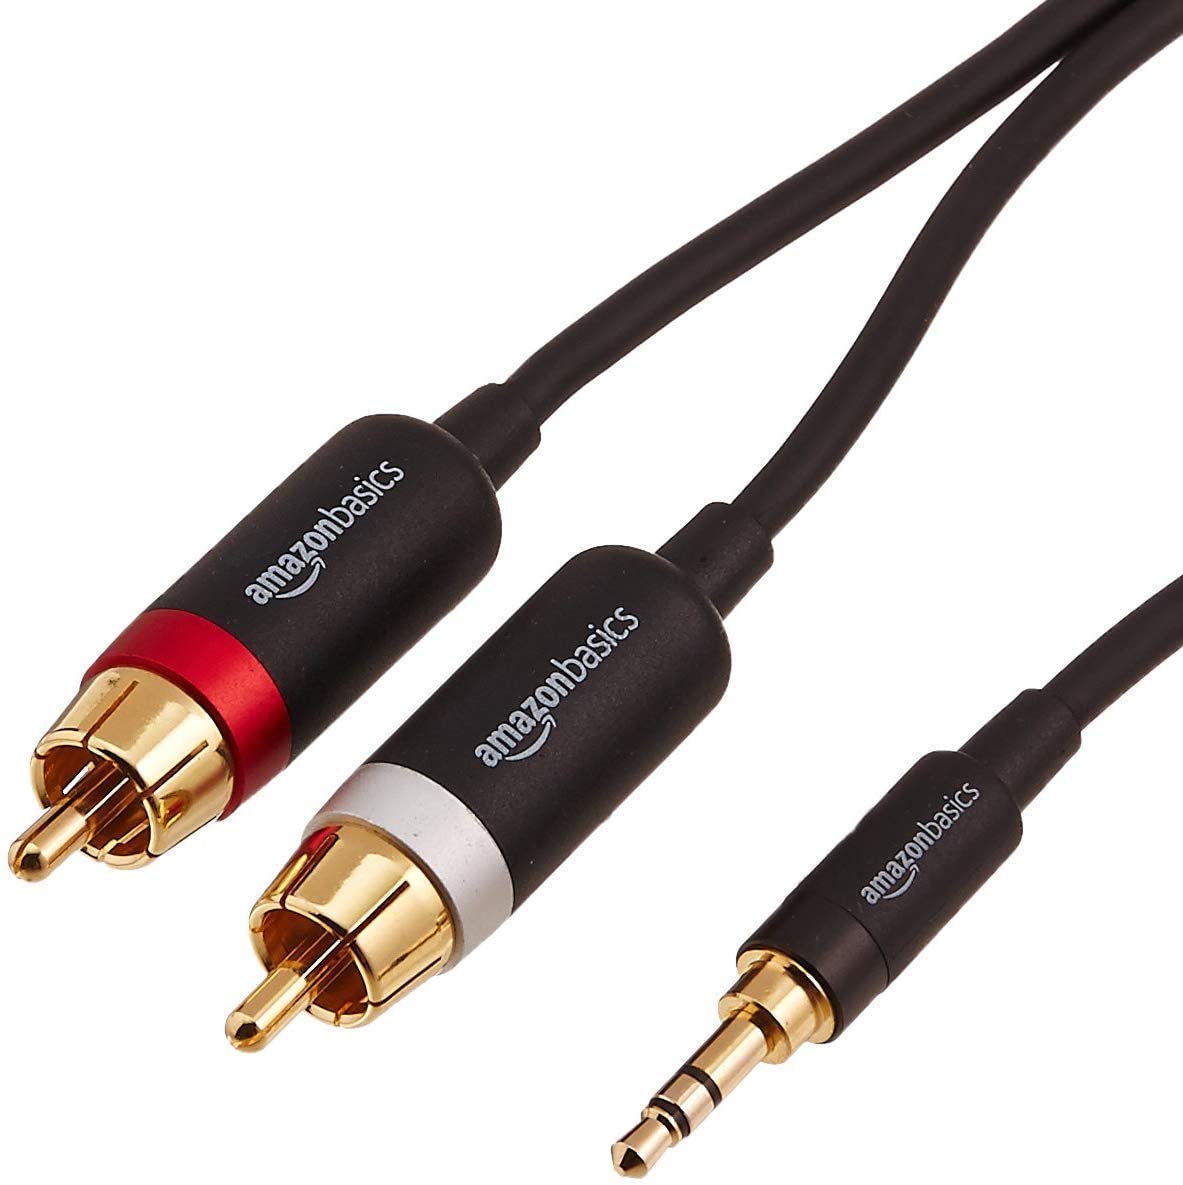 2. Amazon Basics Adapter Audio Stereo Cable